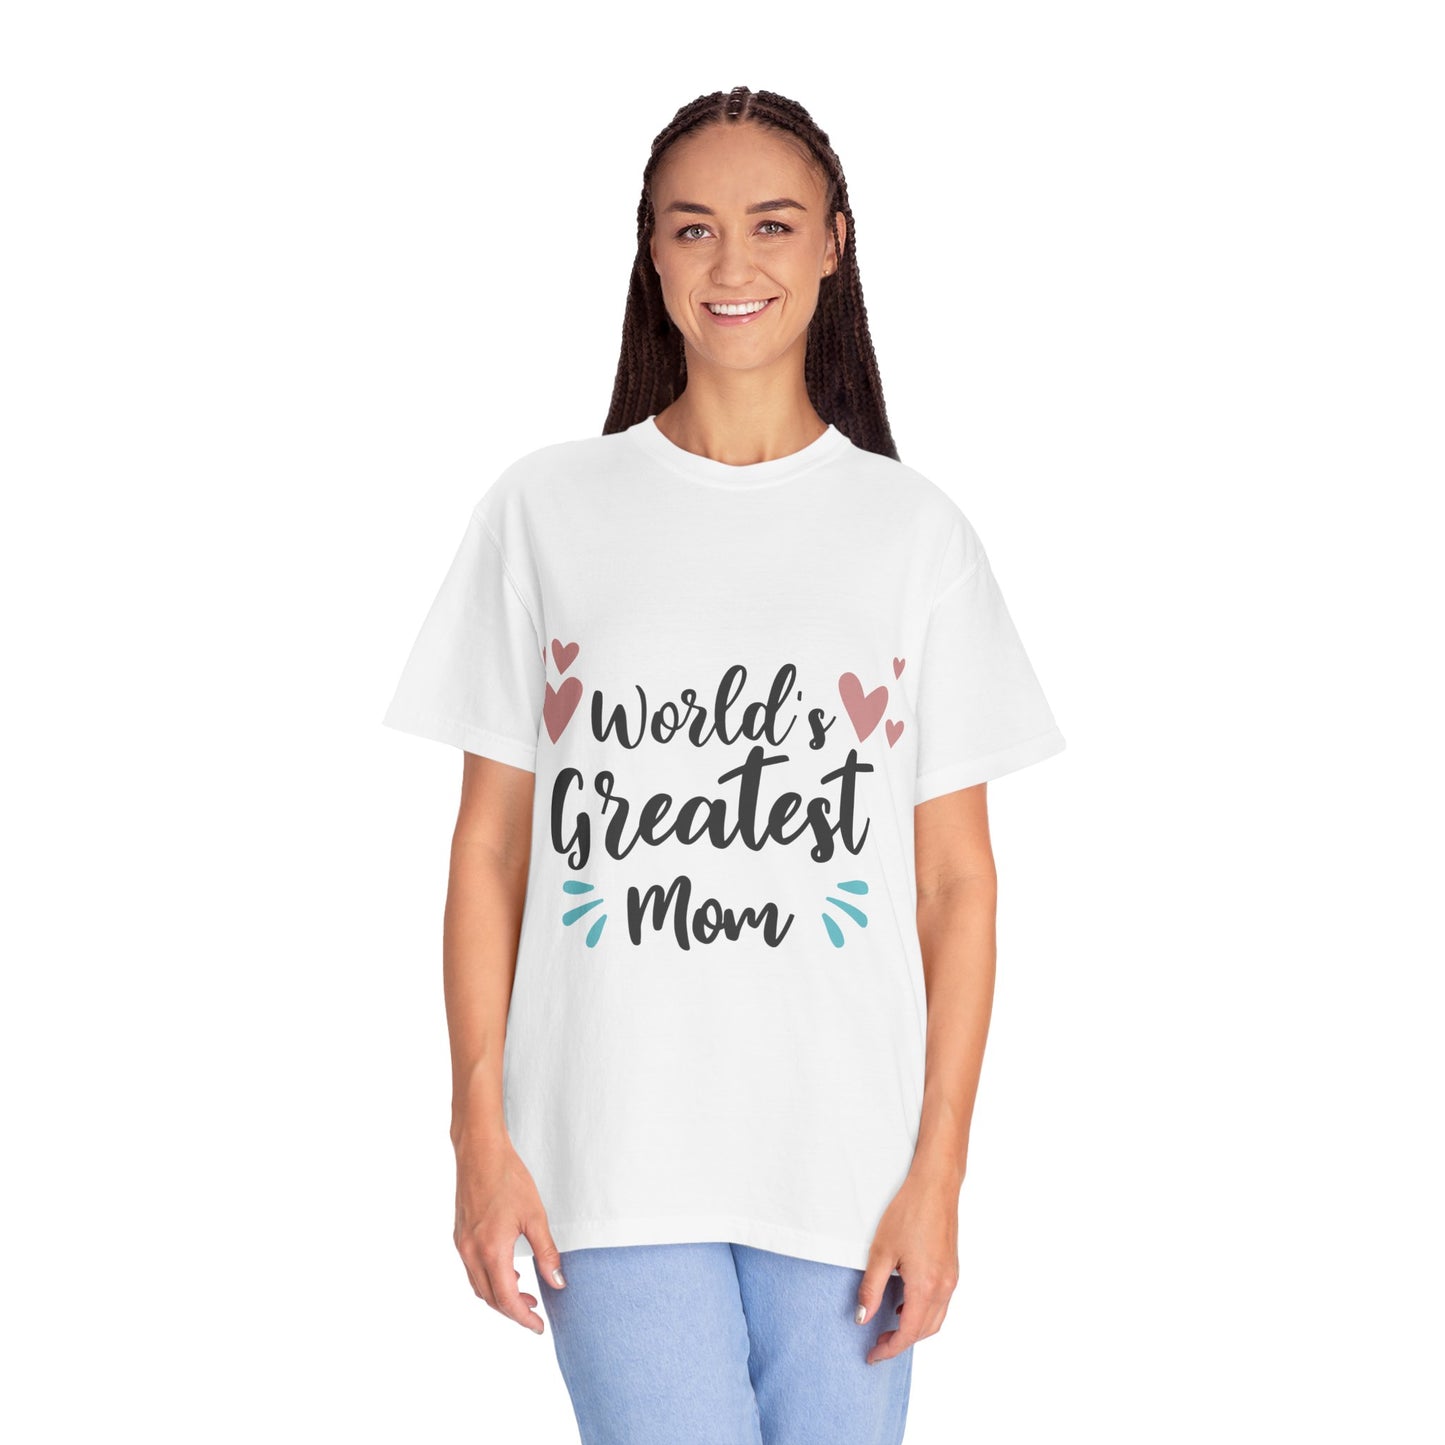 World greatest mom - Unisex Garment-Dyed T-shirt